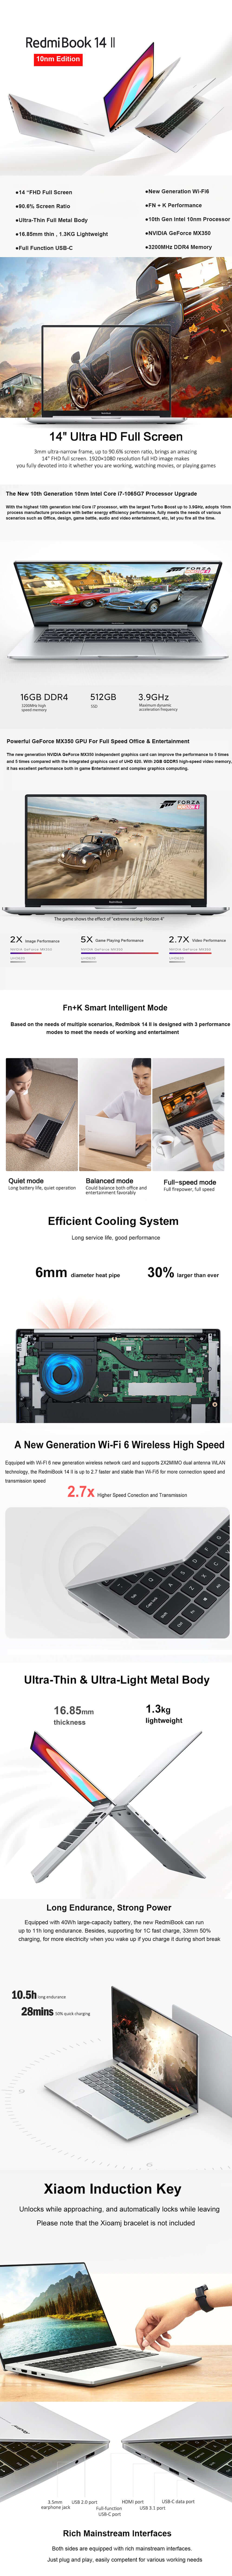 Xiaomi RedmiBook 14 Laptop II 14 inch Intel i7-1065G7 NVIDIA GeForce MX350 16G DDR4 512GB SSD 91% Ratio 100%sRGB WiFi 6 Full-featured Type-C Notebook 3